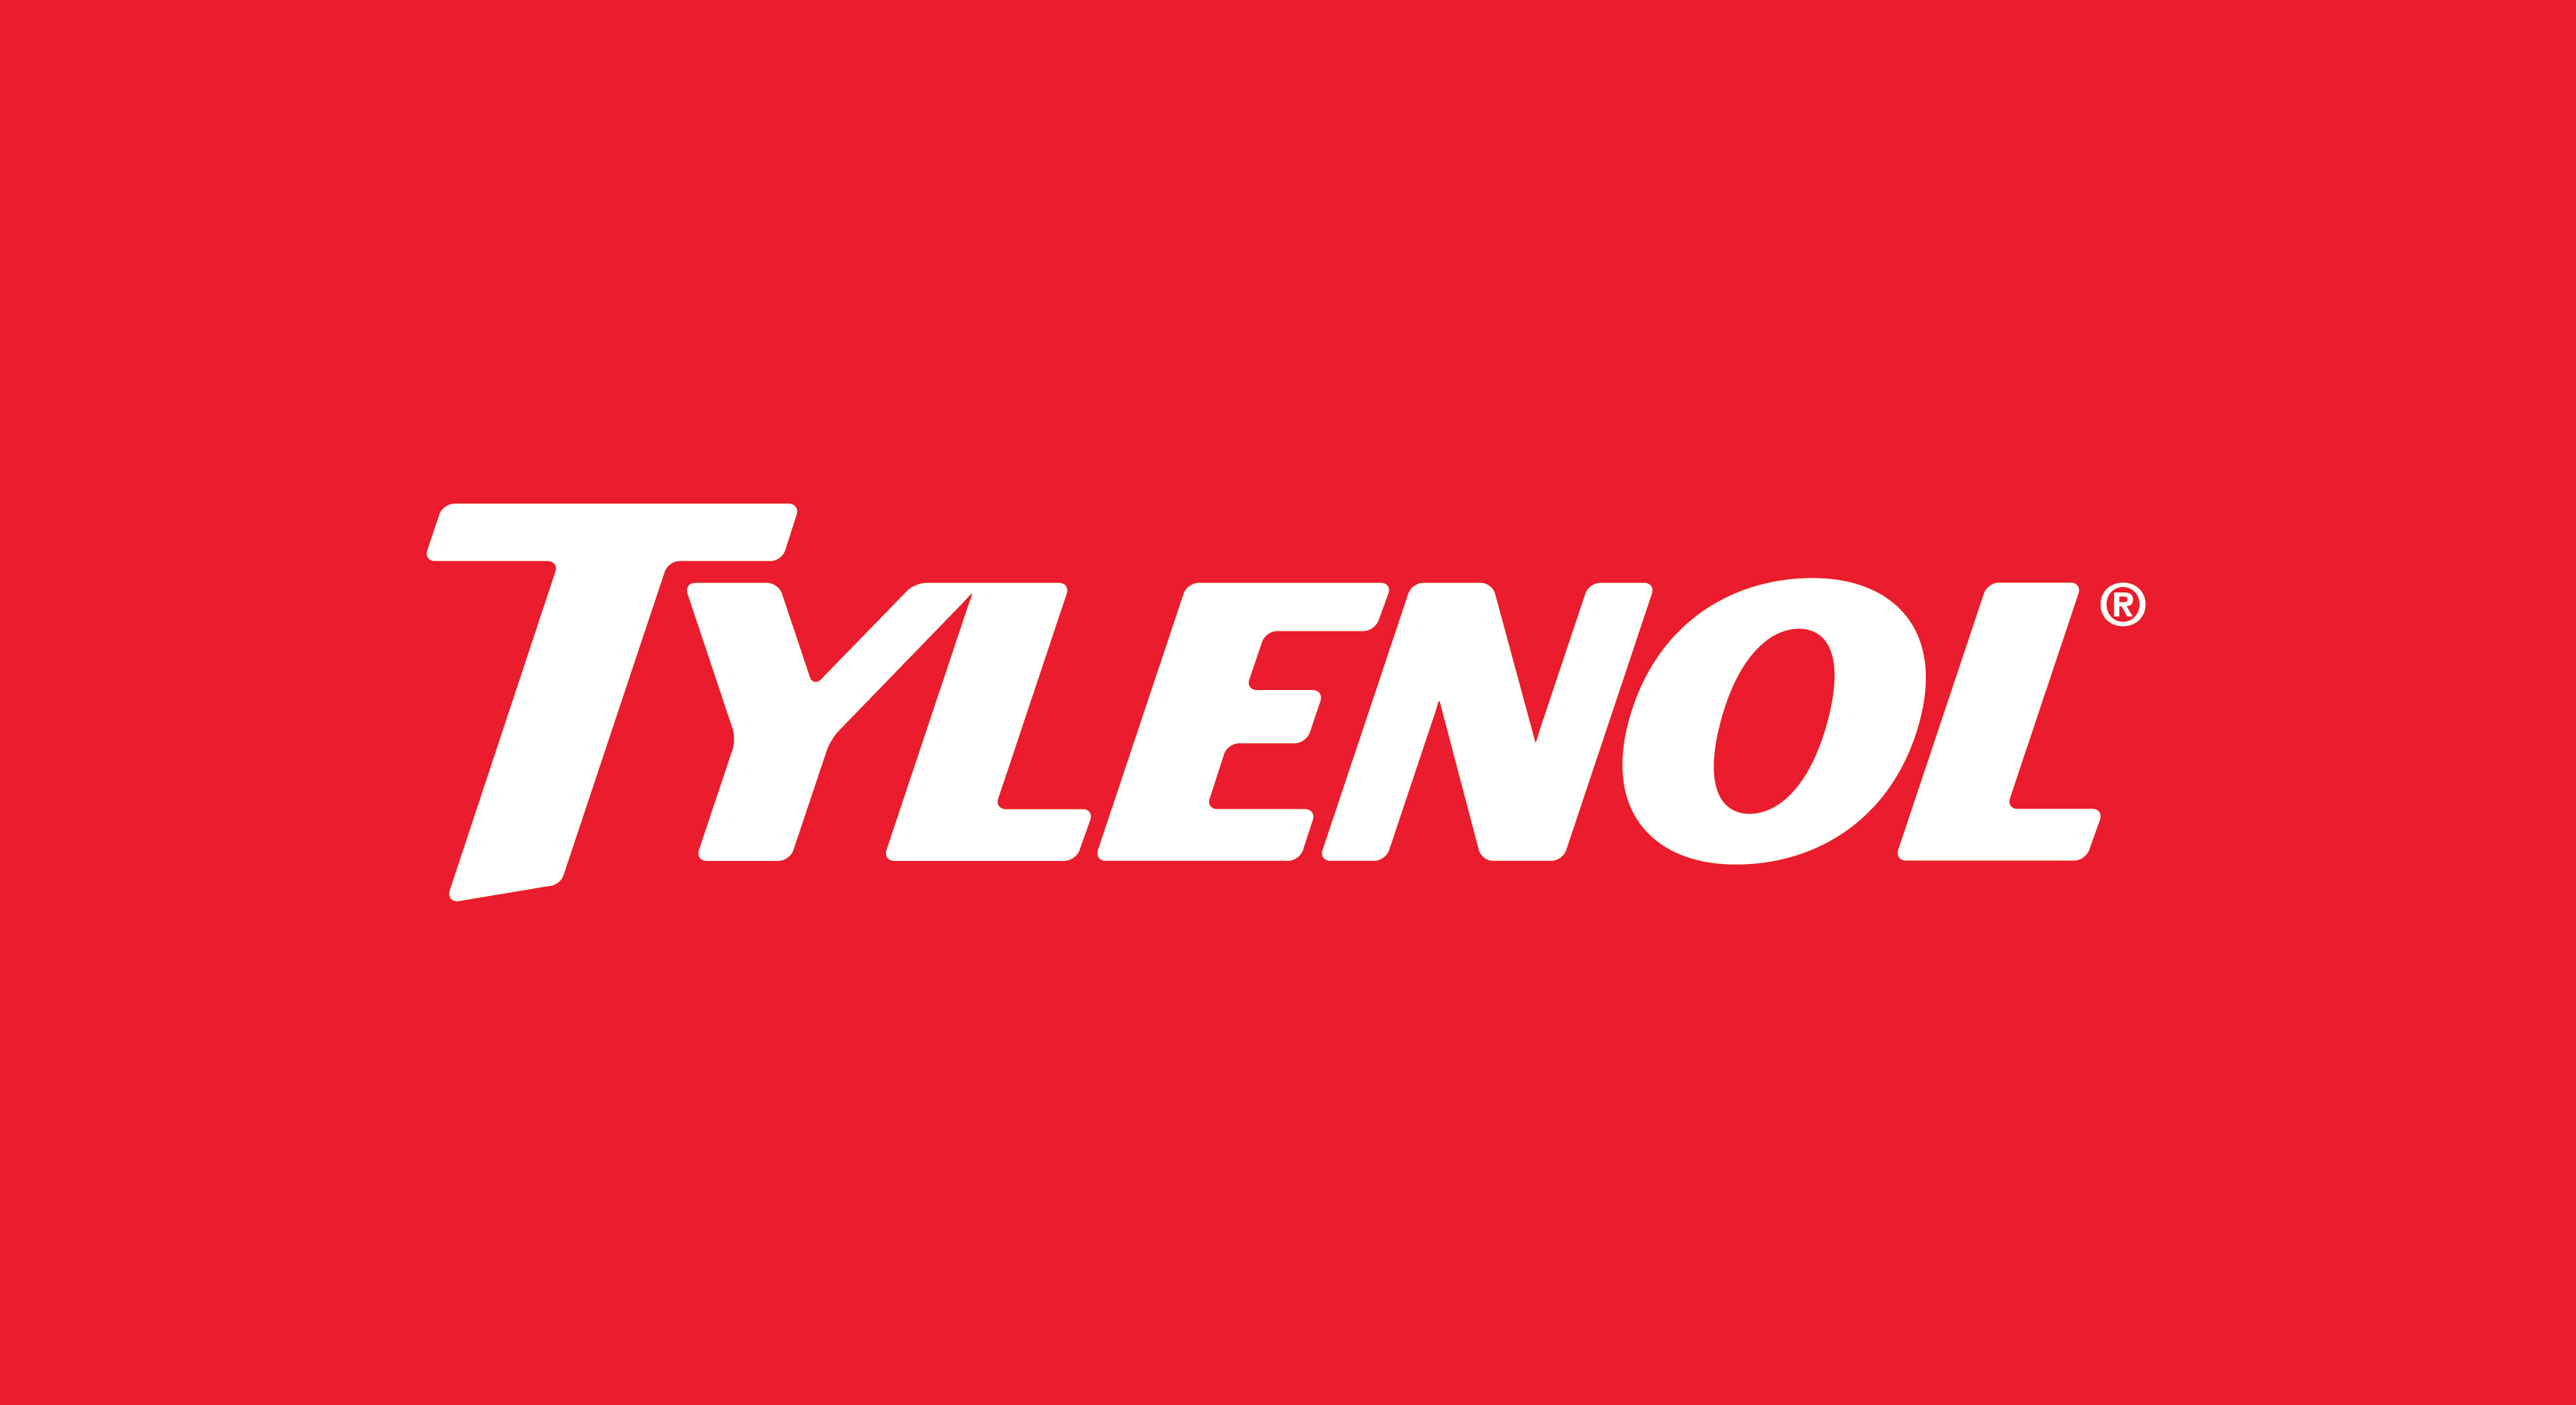 tylenol logo